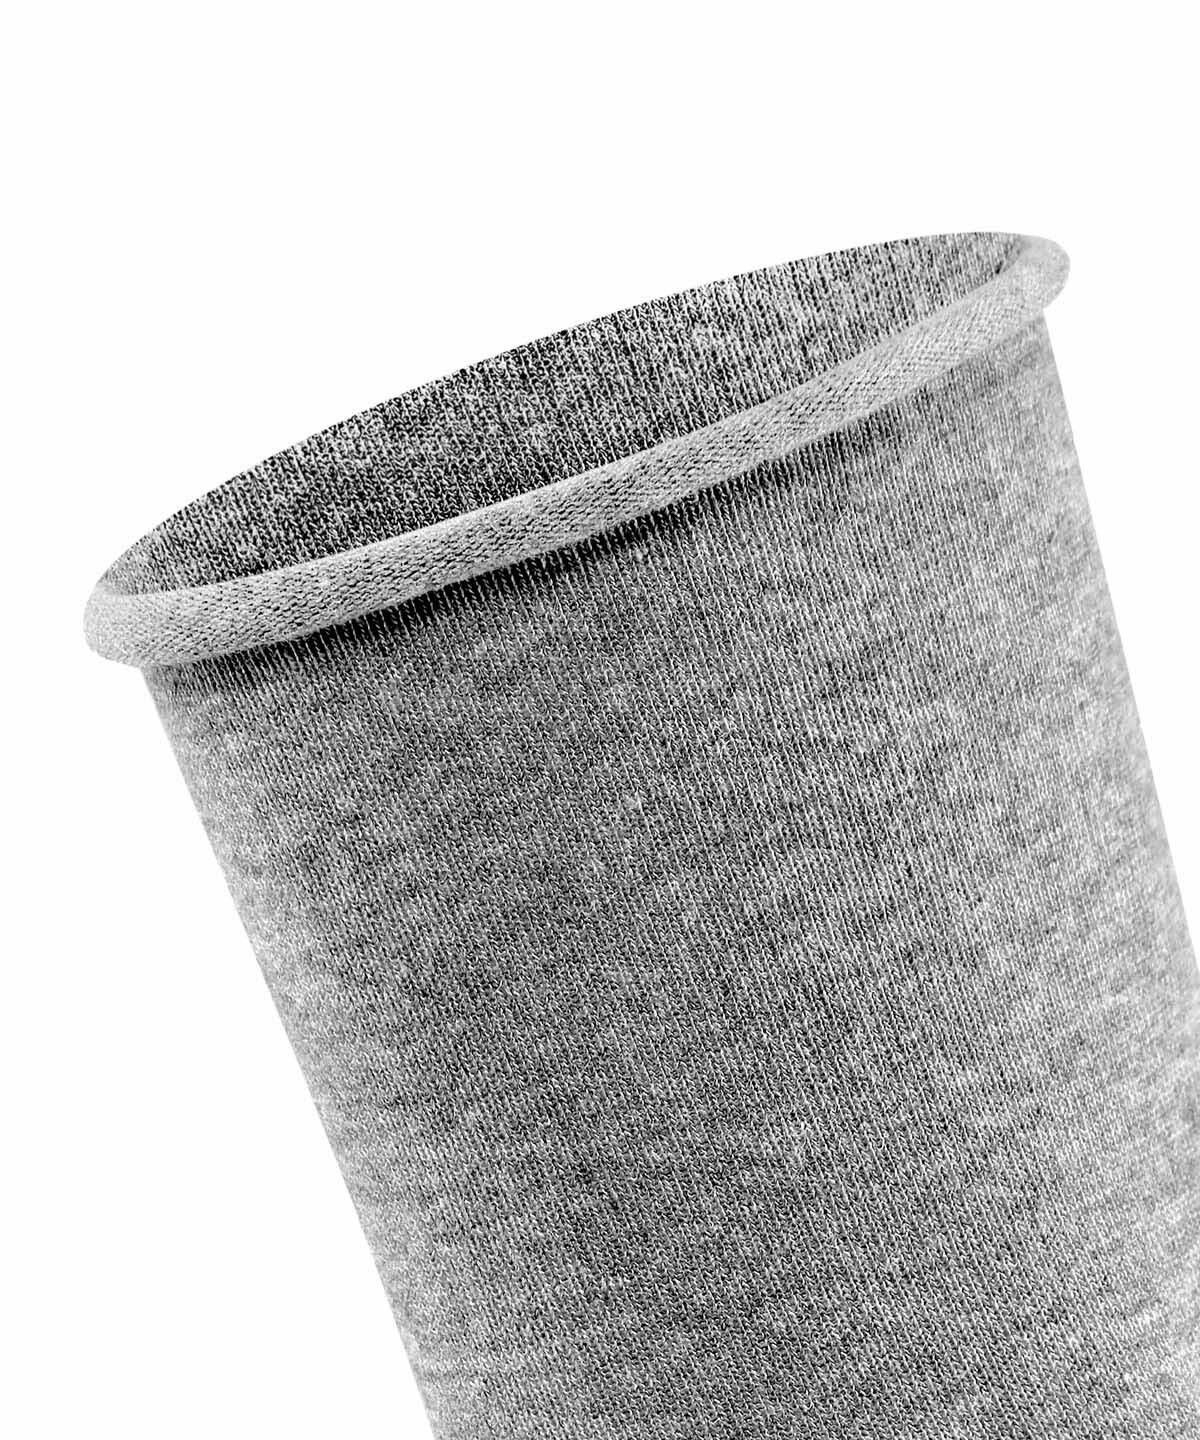 Damen Uni, - Rollbündchen Breeze FALKE Kurzsocken Active Socken Grau